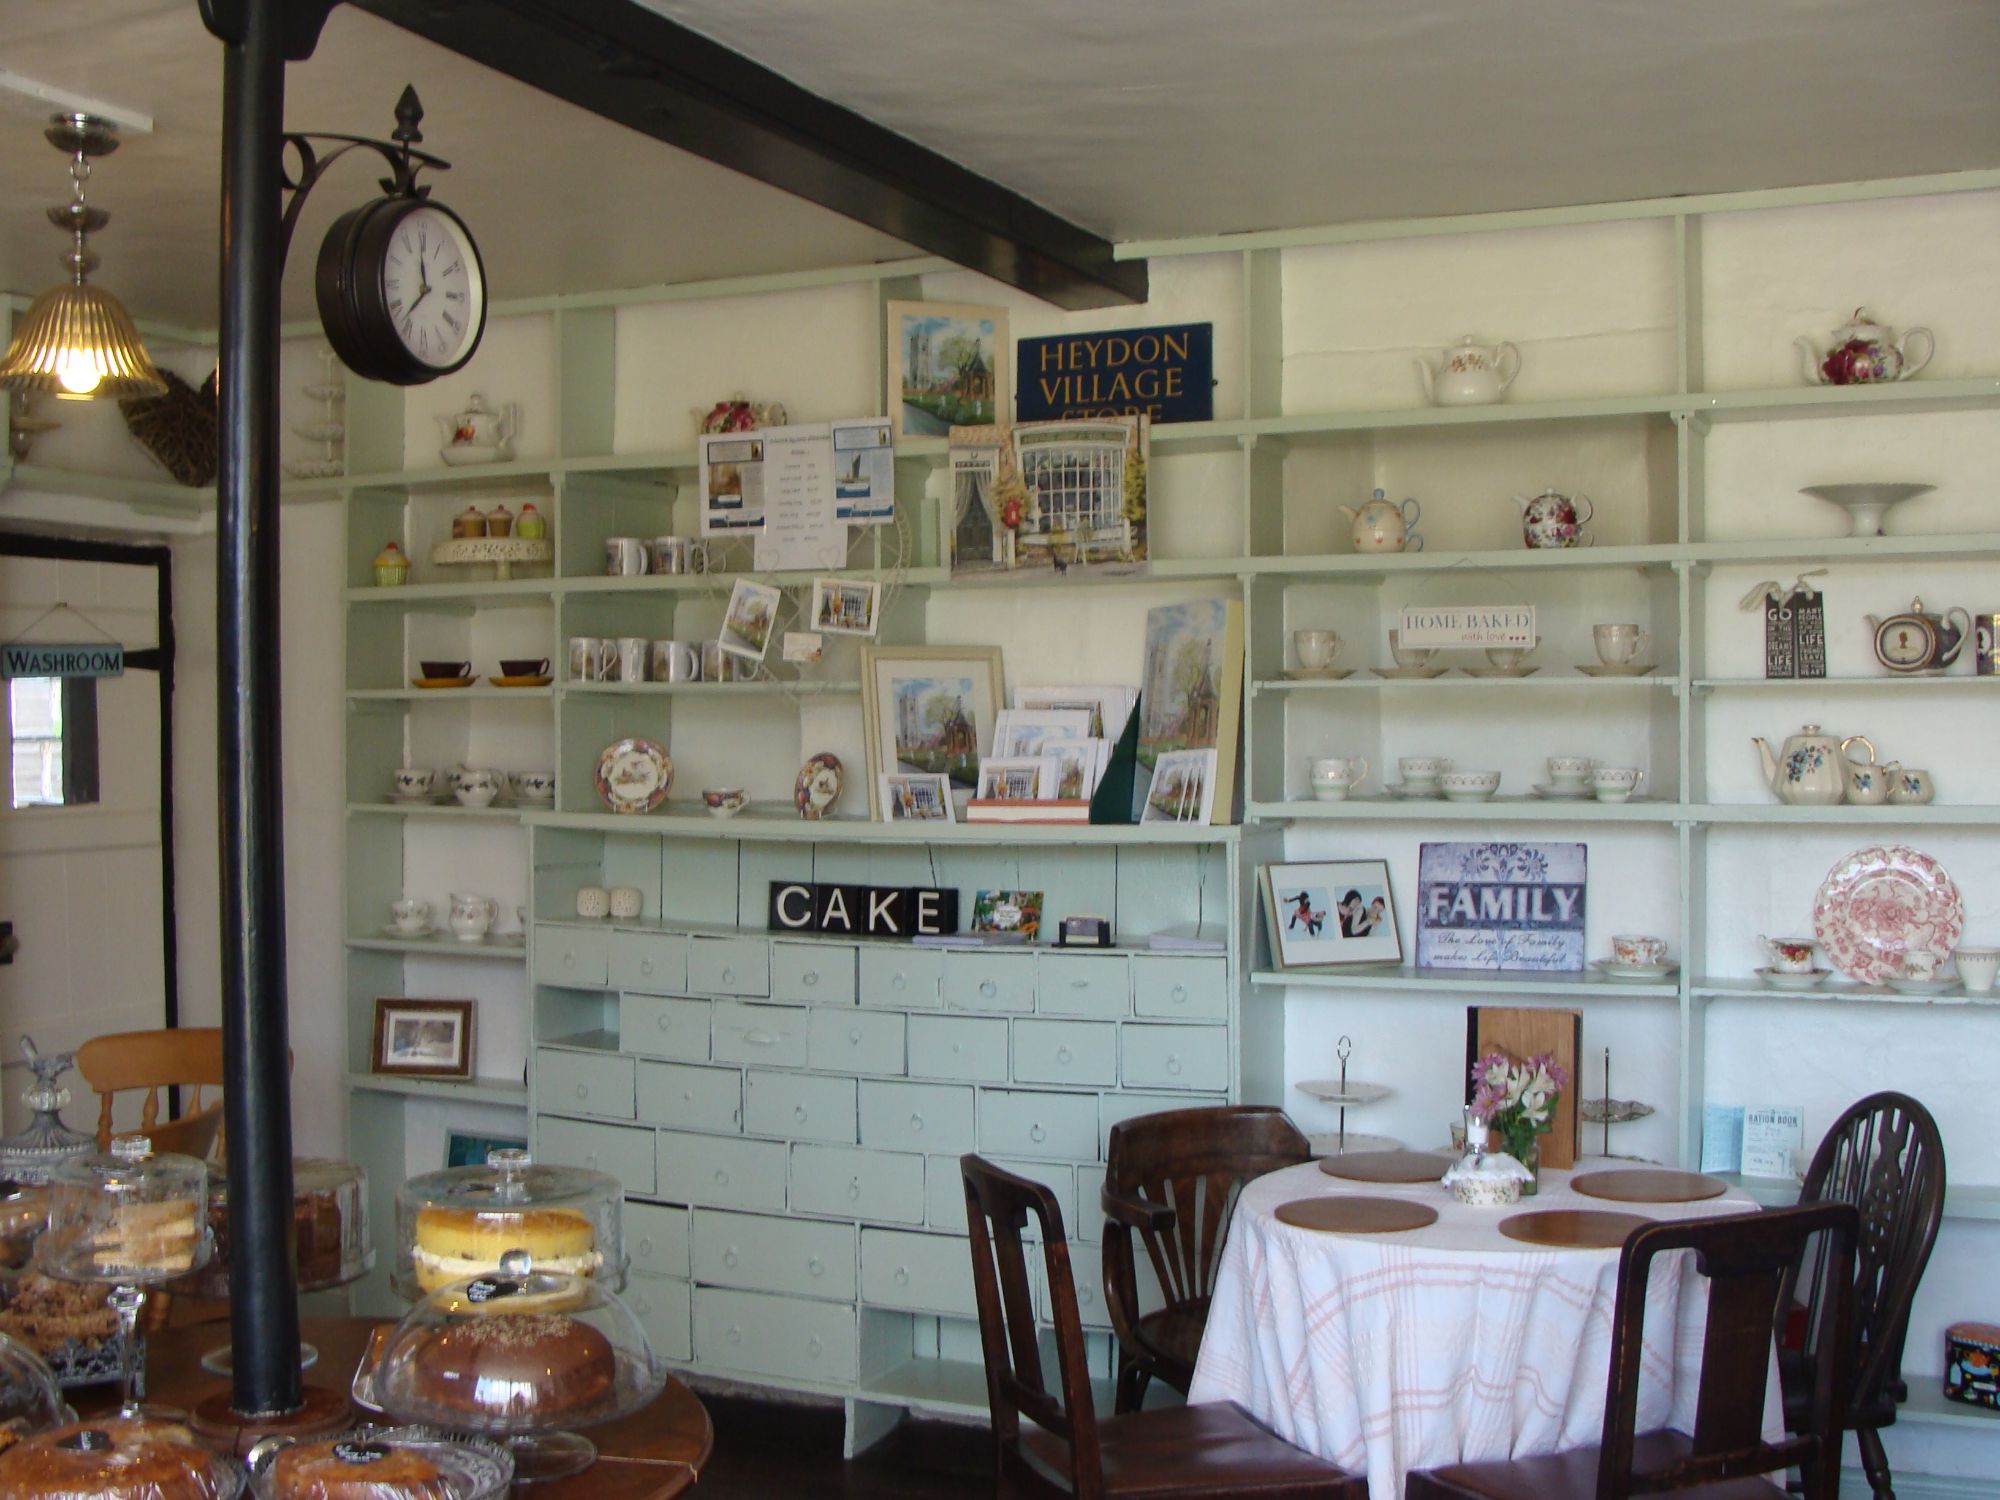 Inside the tea shop